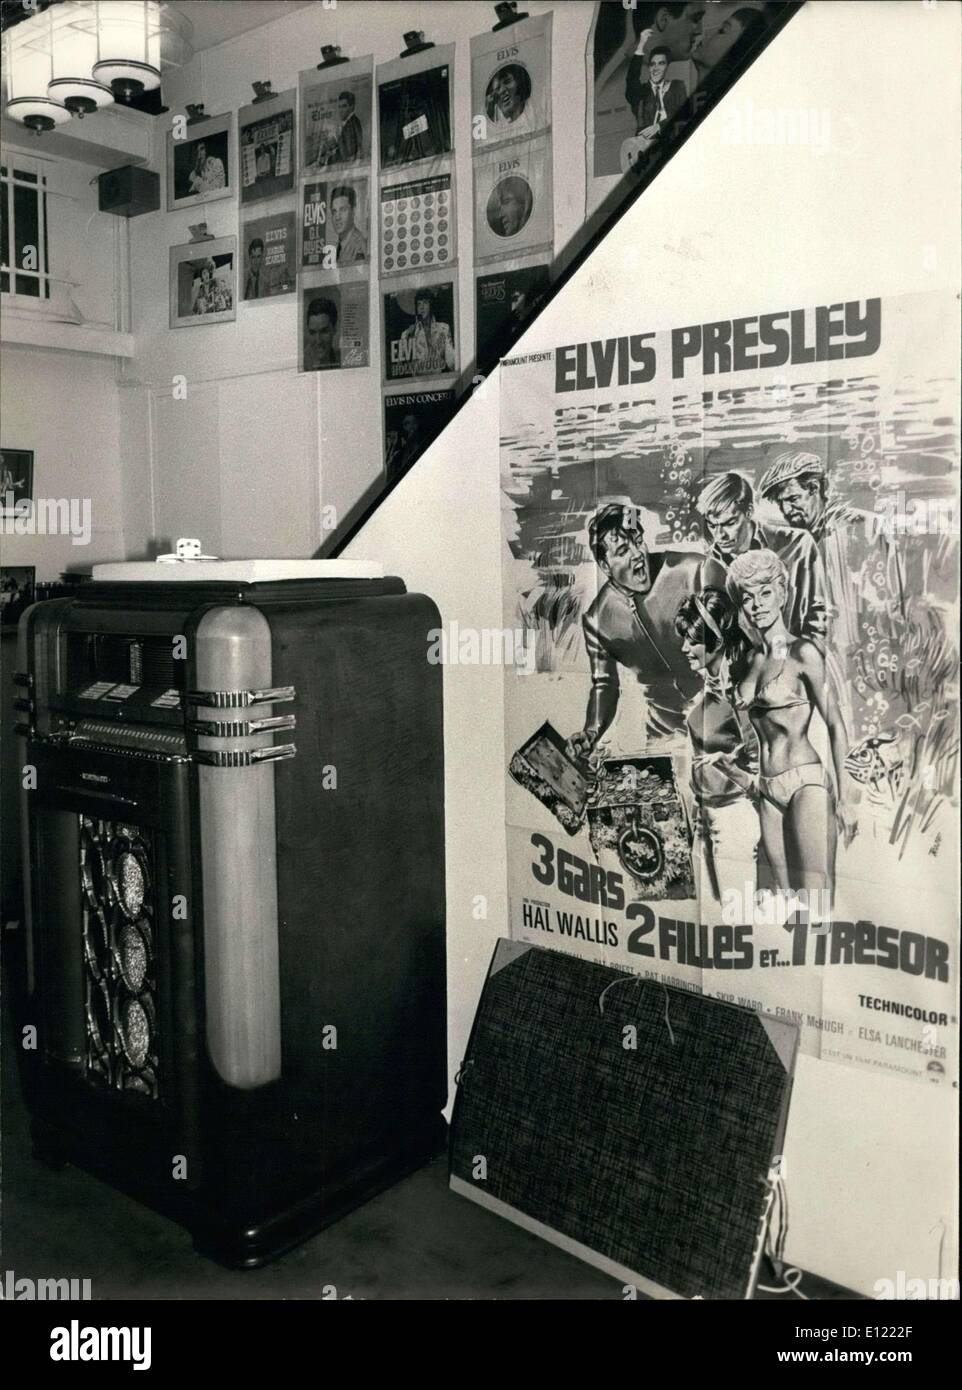 Dec. 03, 1982 - Elvis Presley Exhibit Stock Photo